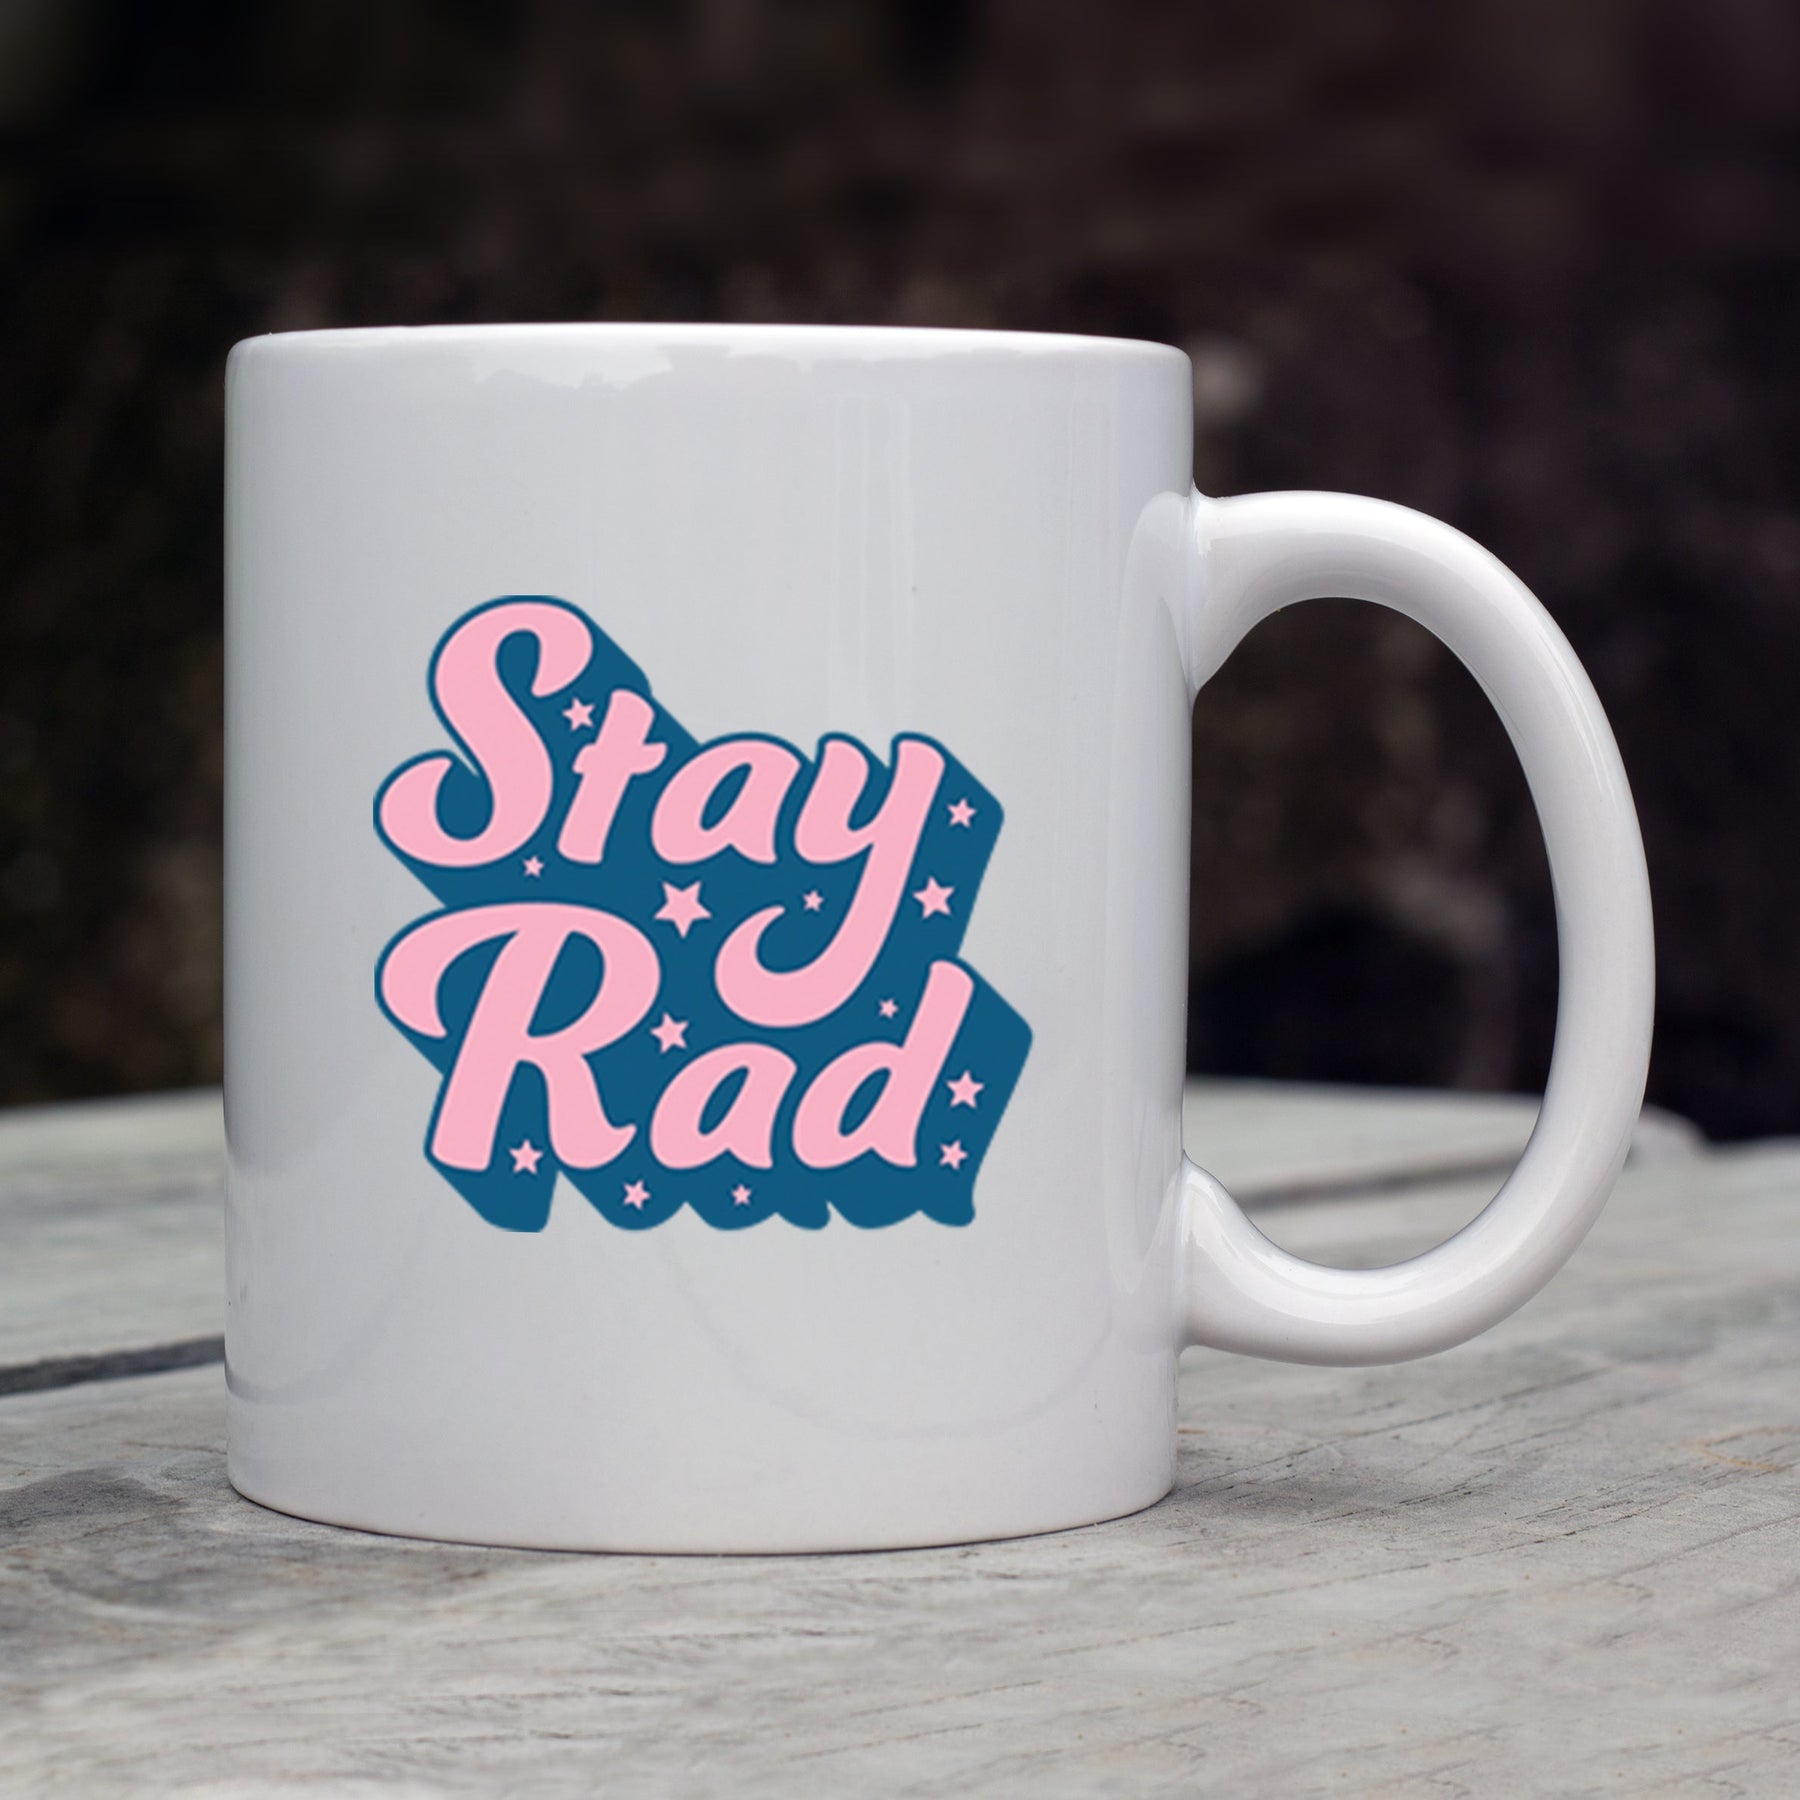 Stay Rad Mug